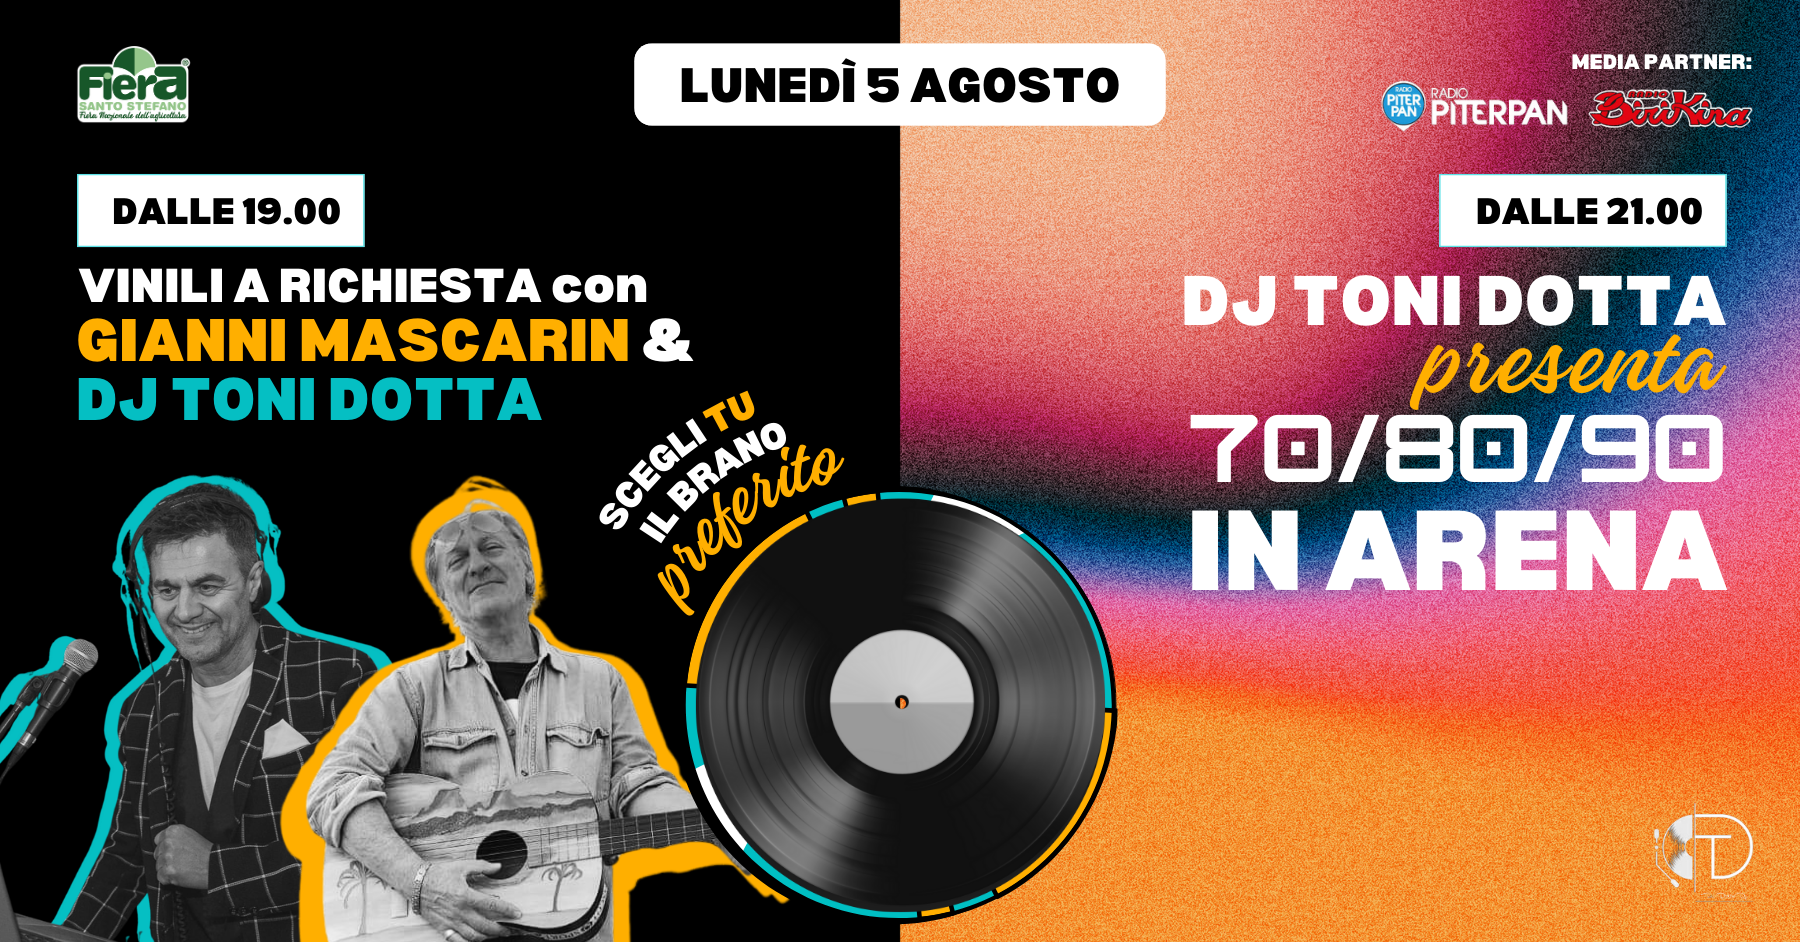 Vinili a richiesta con Gianni Mascarin e DJ Toni Dotta – Top Selection 70/80/90 con DJ Toni Dotta